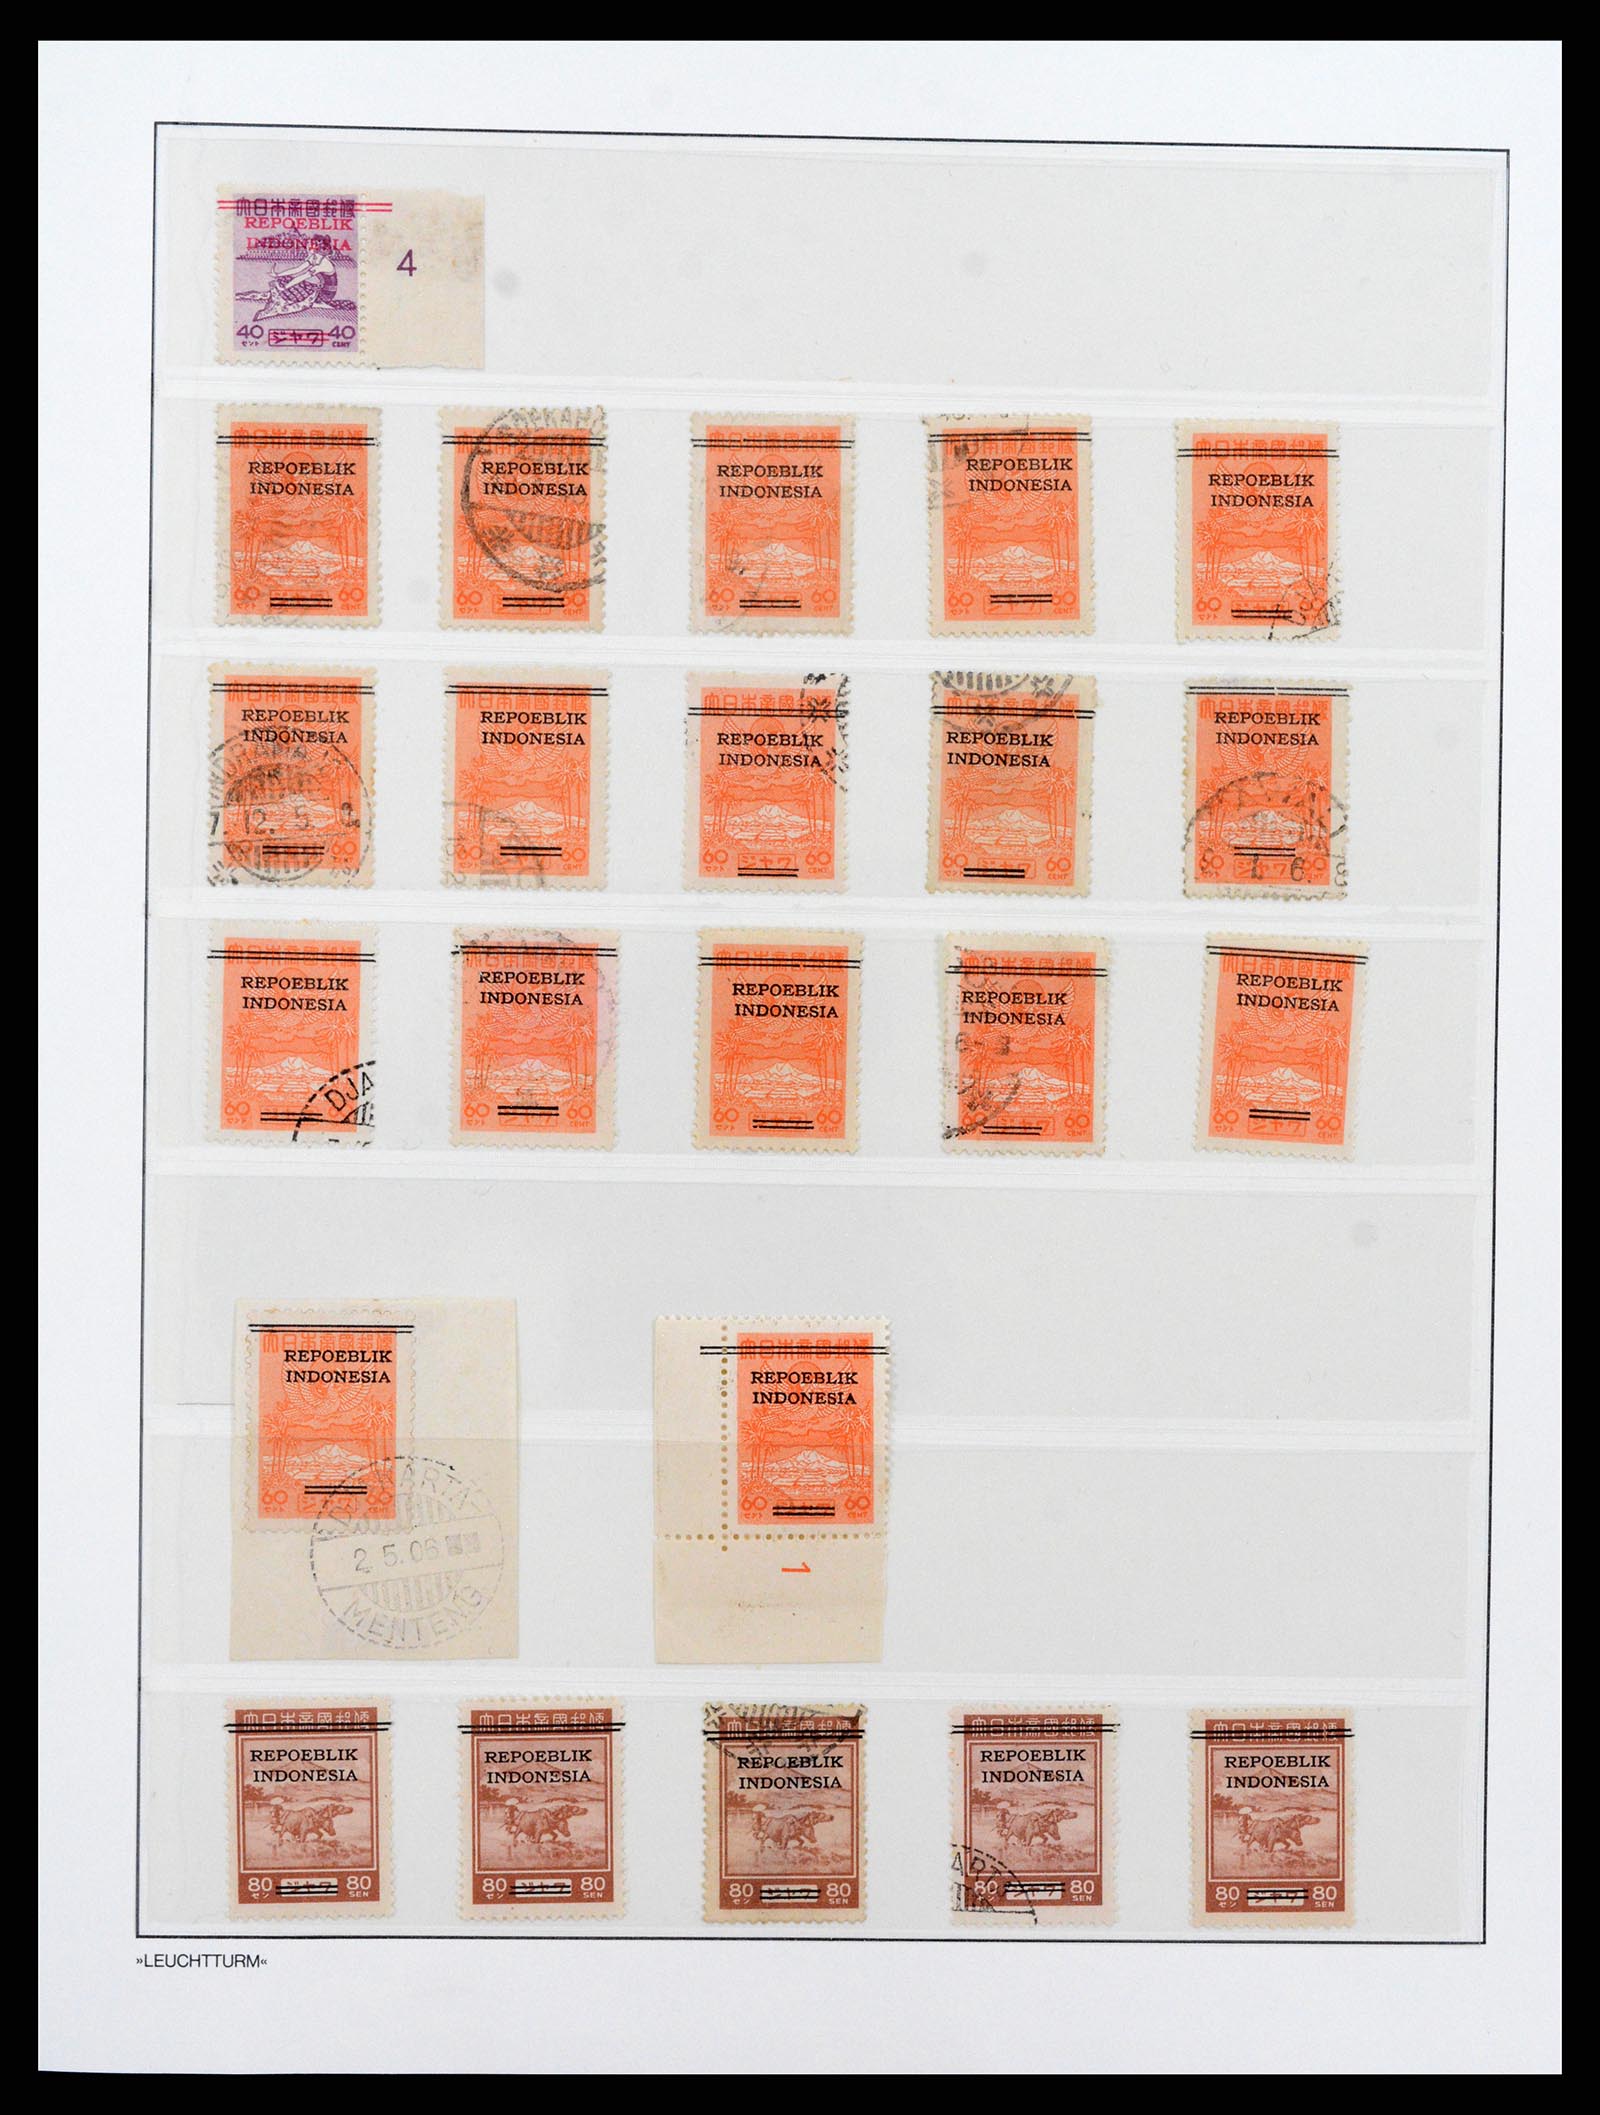 37435 006 - Stamp collection 37435 Indonesia interim period 1945-1948.